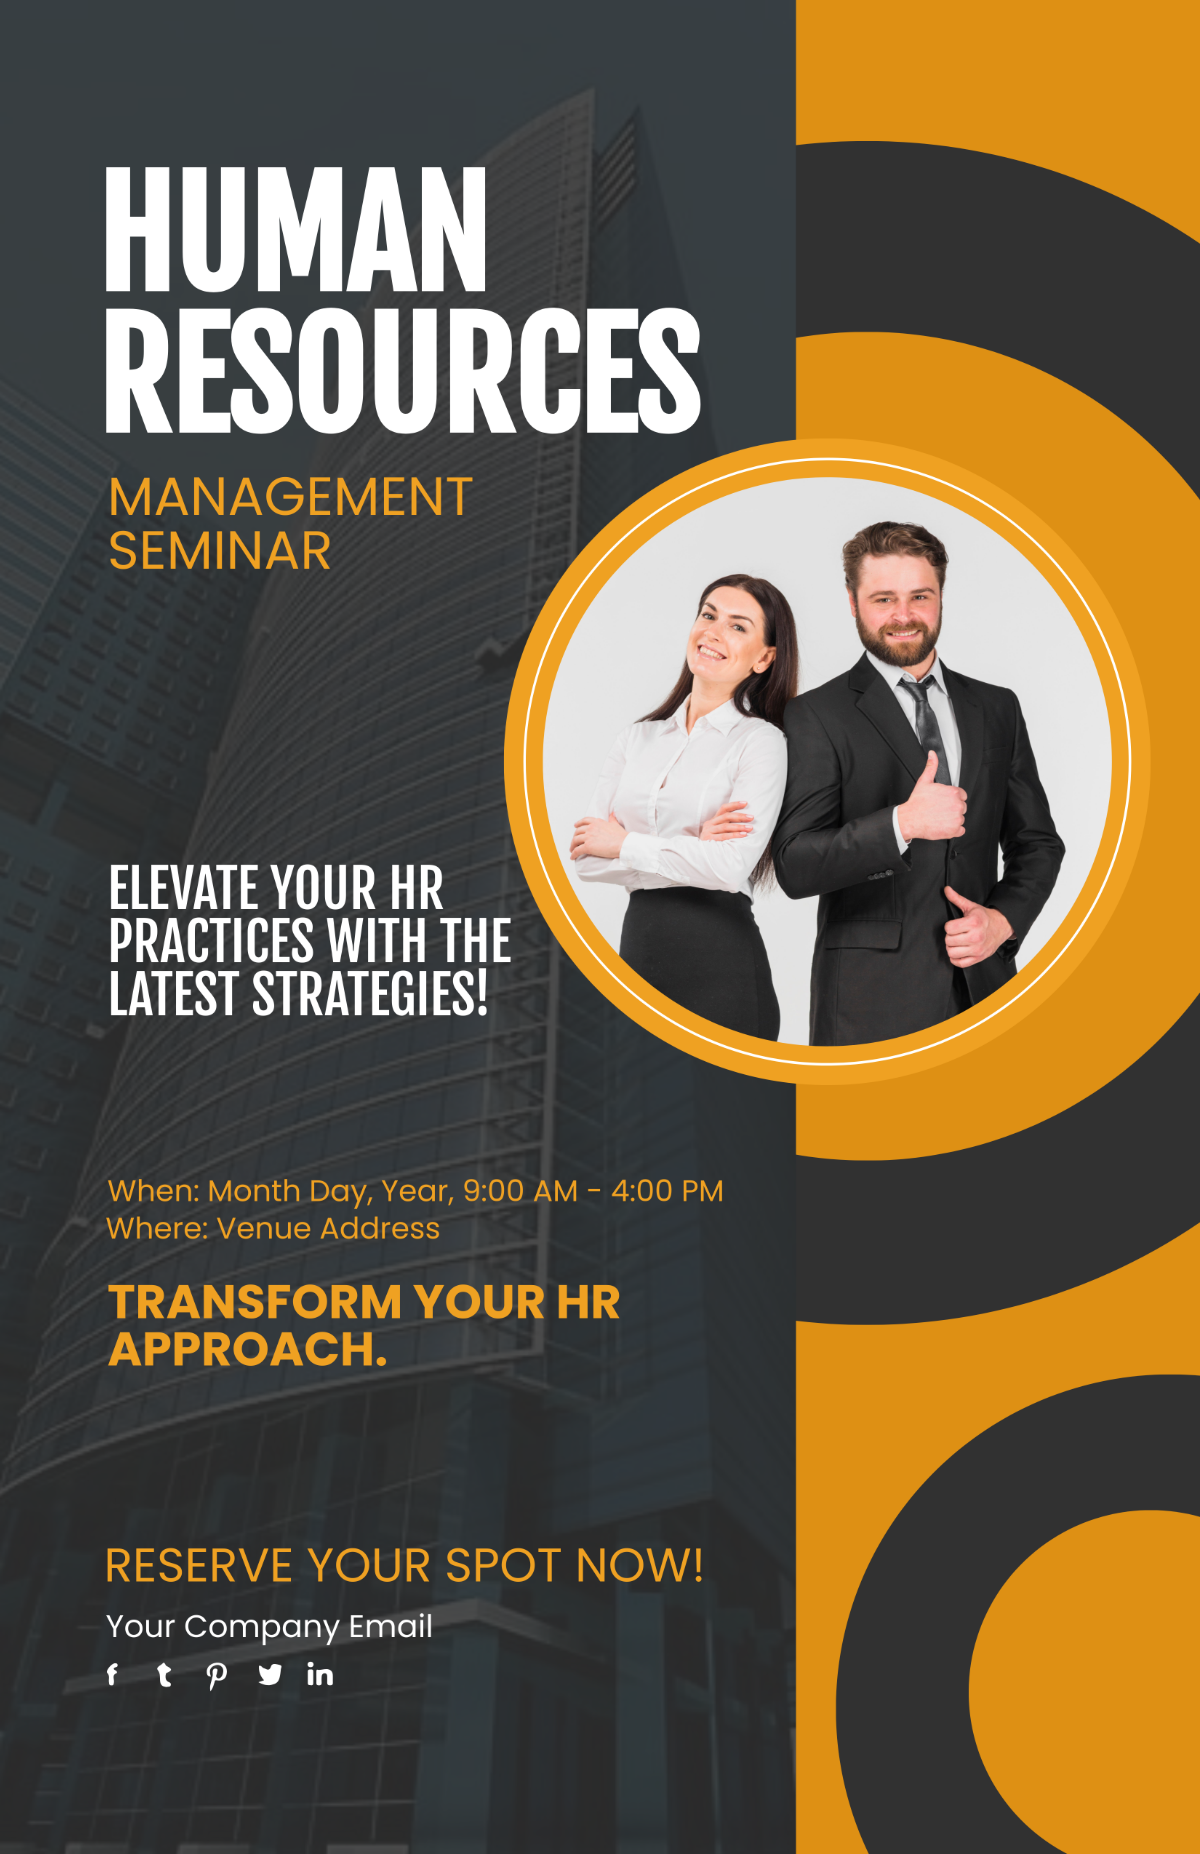 Human Resources Management Seminar Poster Template